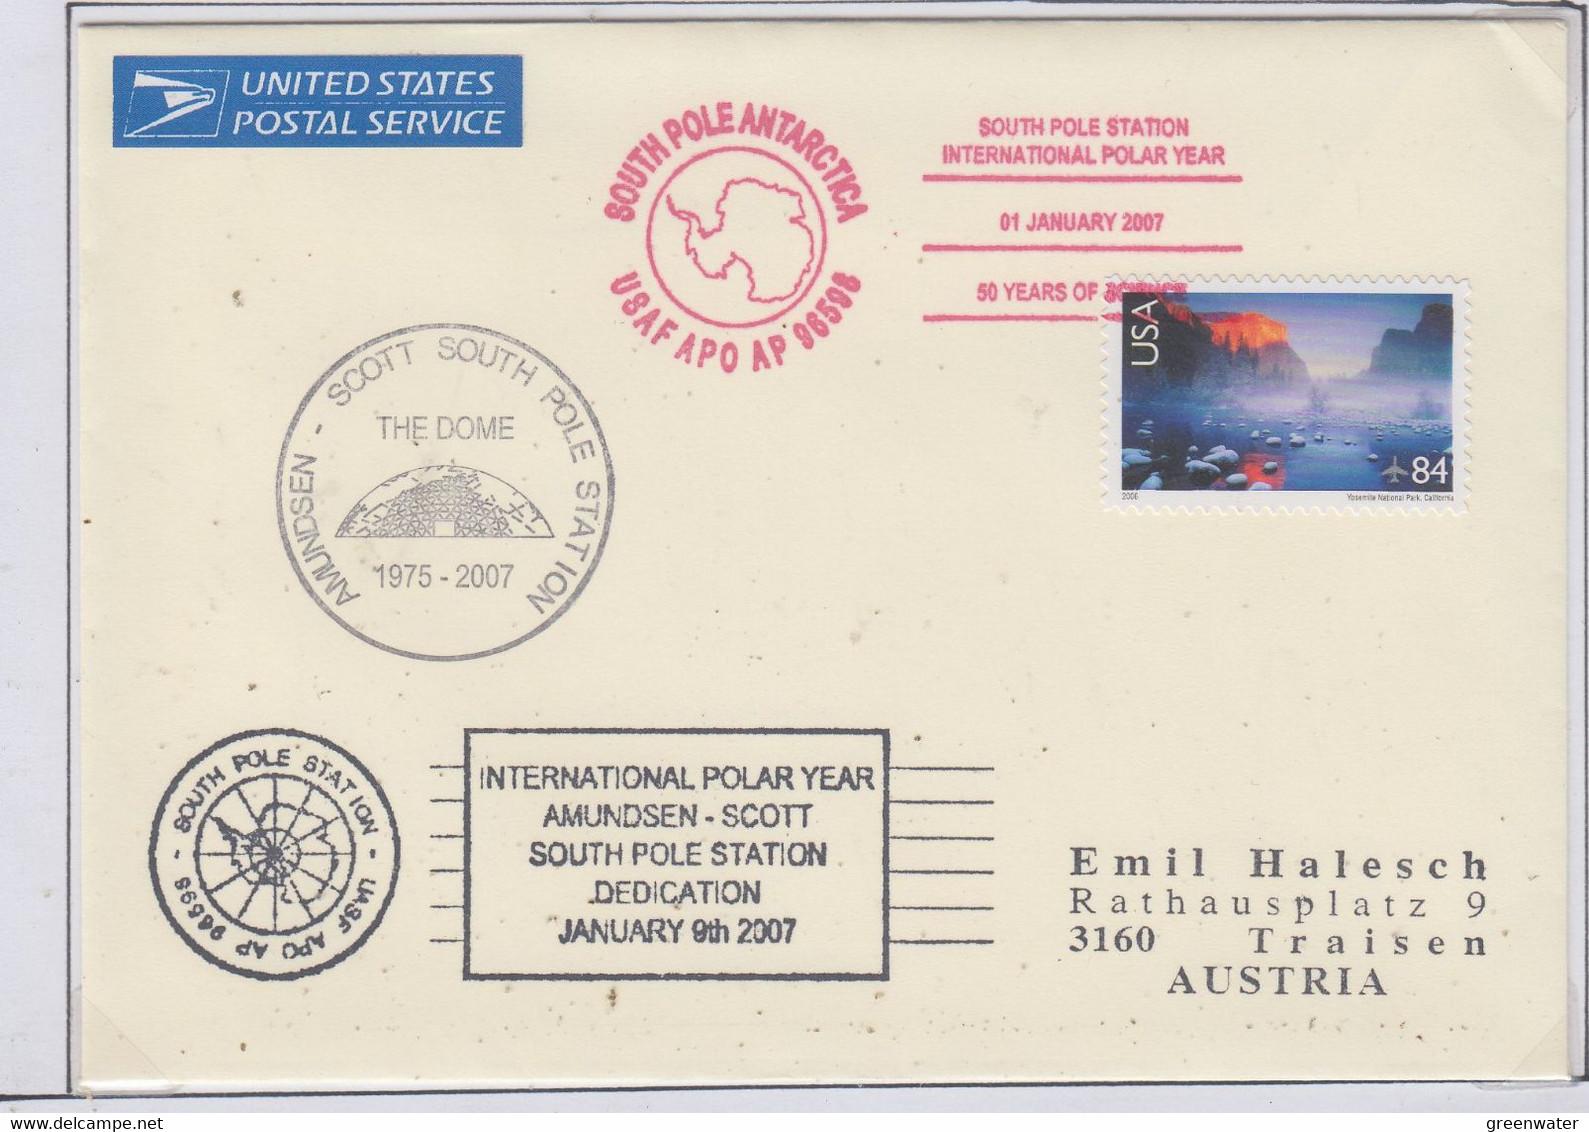 USA  South Pole Cover International Polar Year  Ca South Pole Station 01 JANUARY 2007 (PS191A) - Internationales Polarjahr